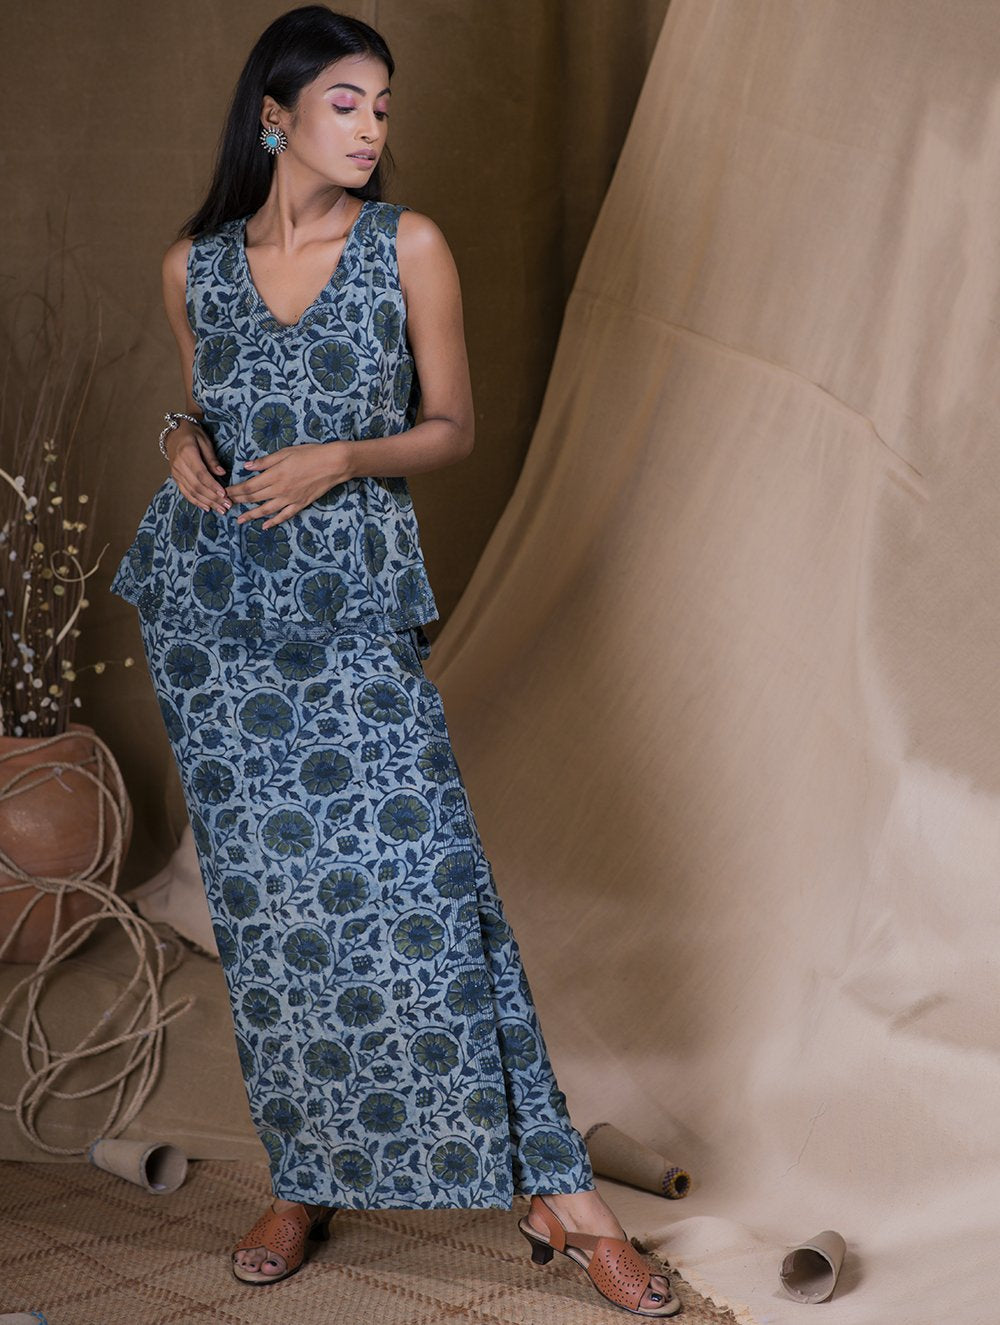 Load image into Gallery viewer, Bagru Block Printed &amp; Beadwork Cotton Wrap Skirt &amp; Sleeveless Top (Set of 2) - Blue Floral